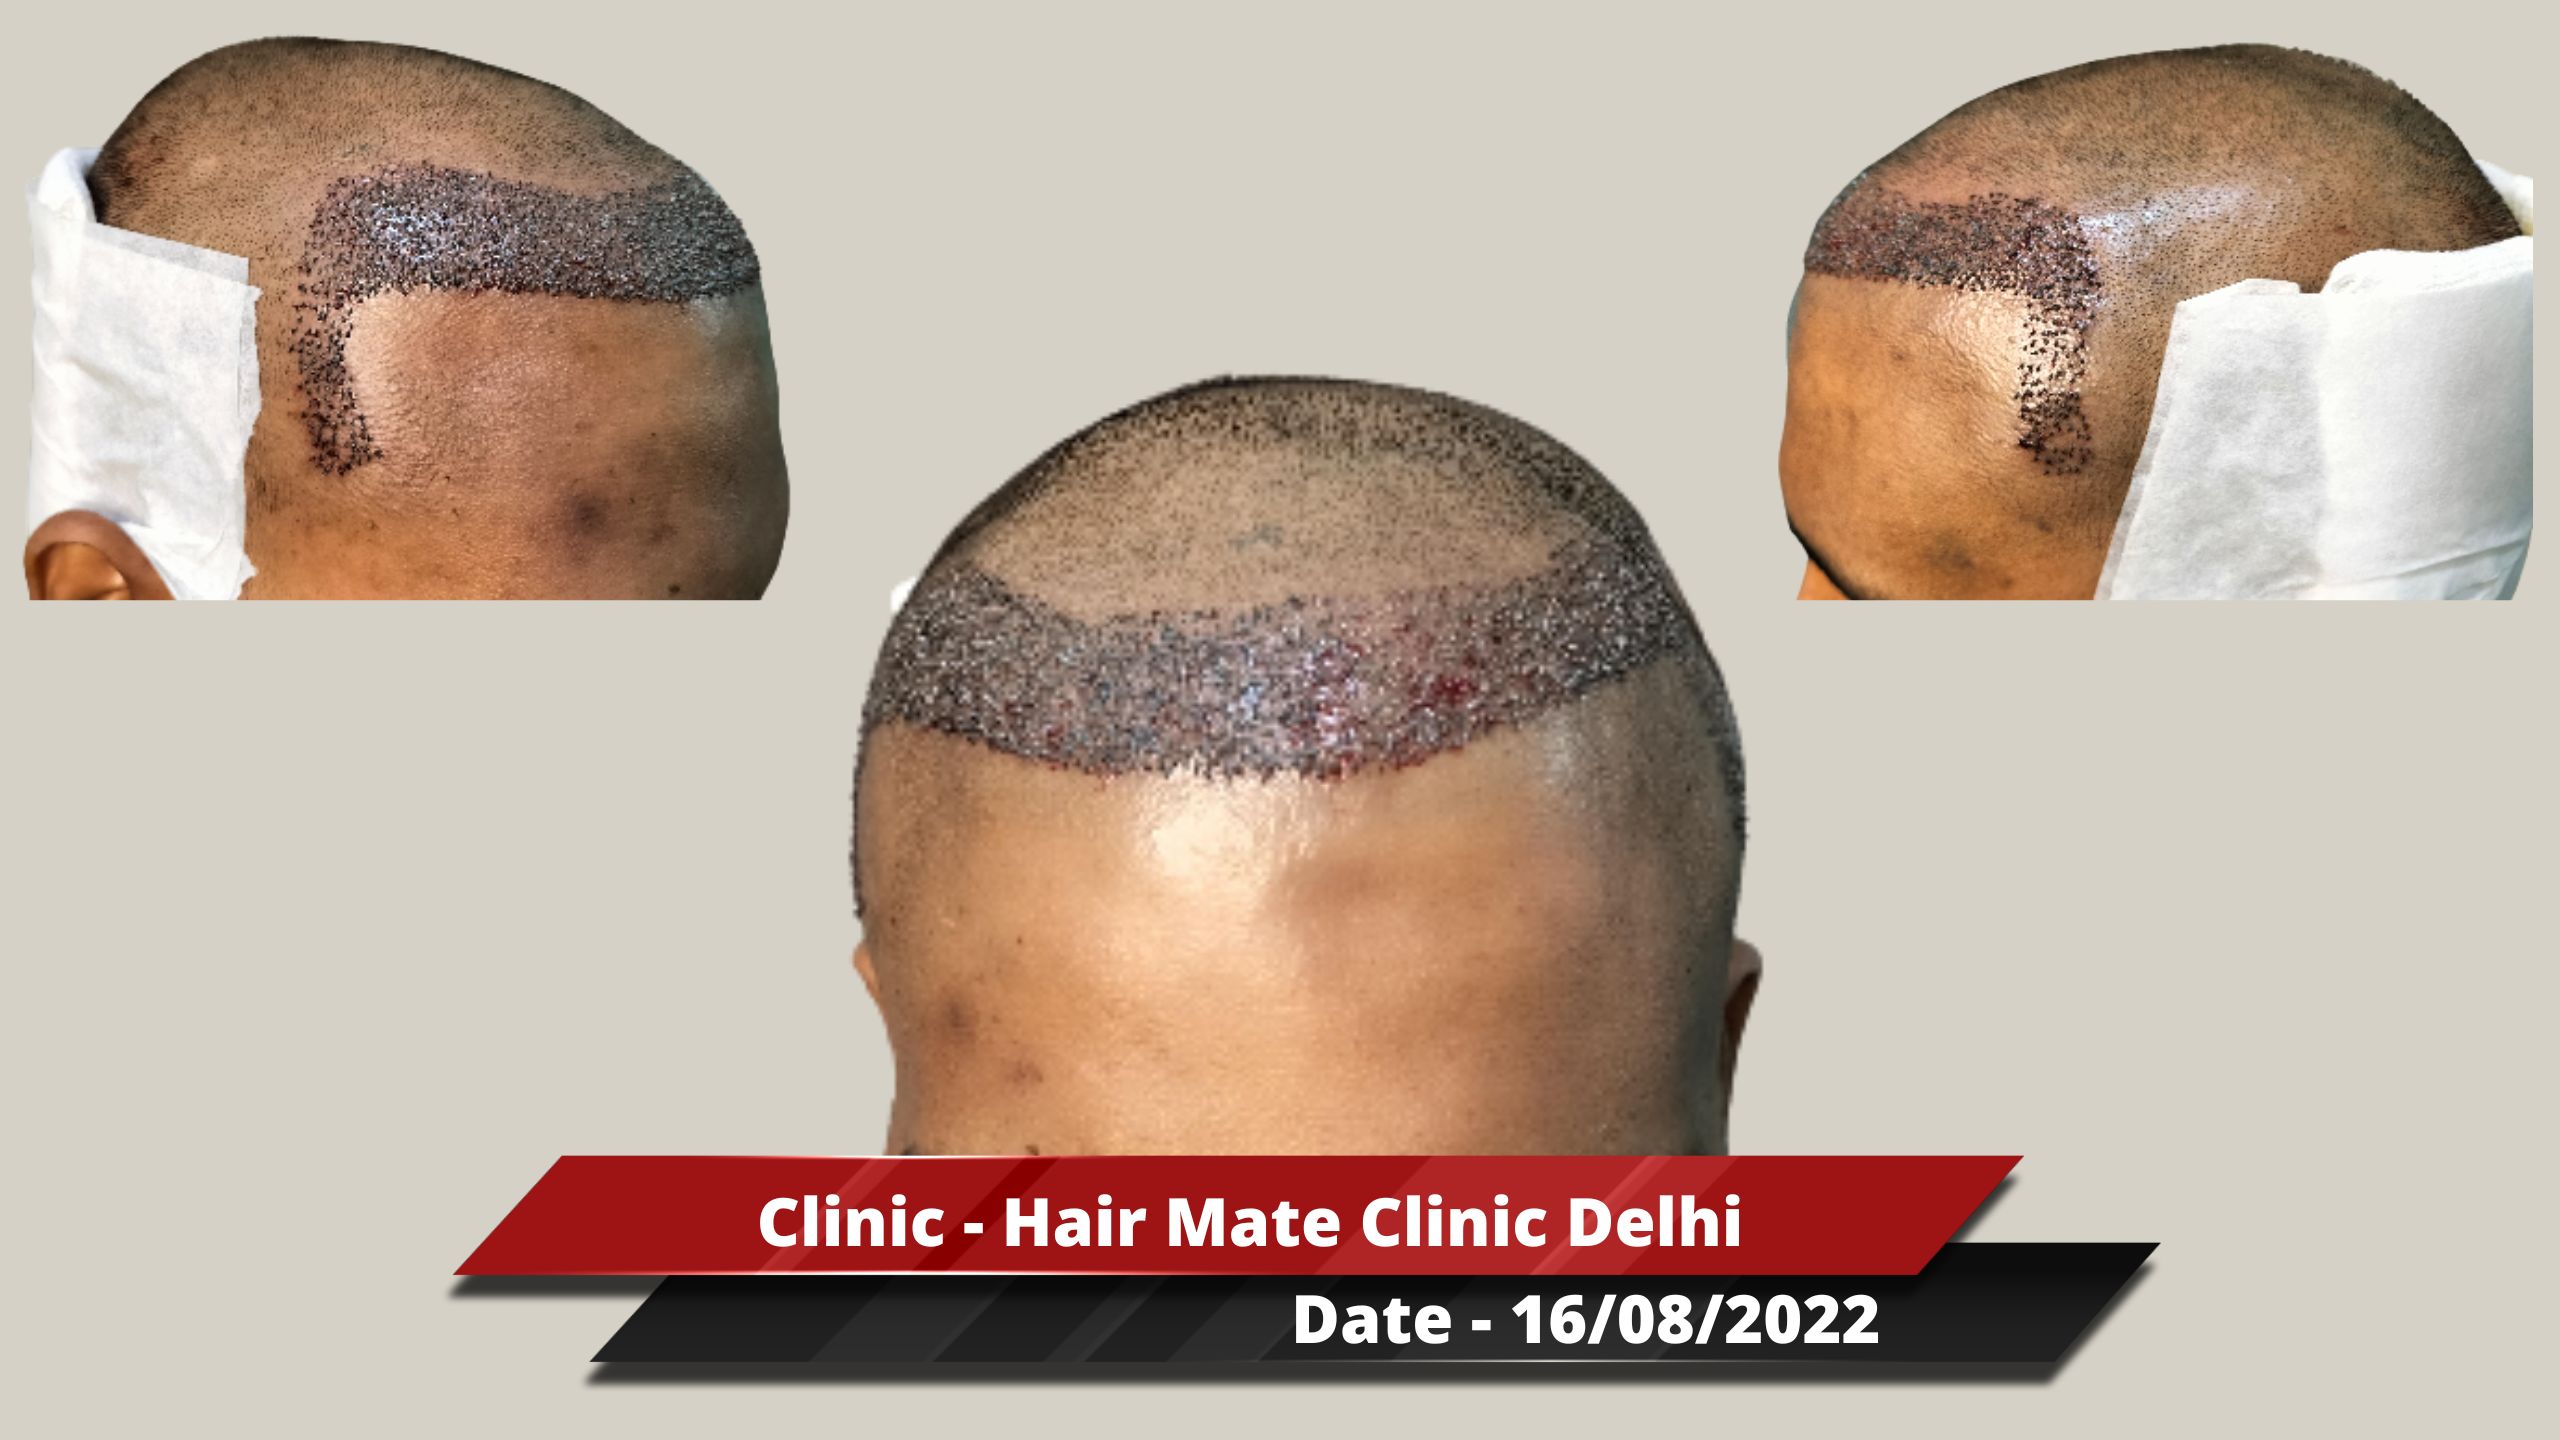 Hair Transplant from Delhi Clinic – 2300 Grafts – Best Hair Help